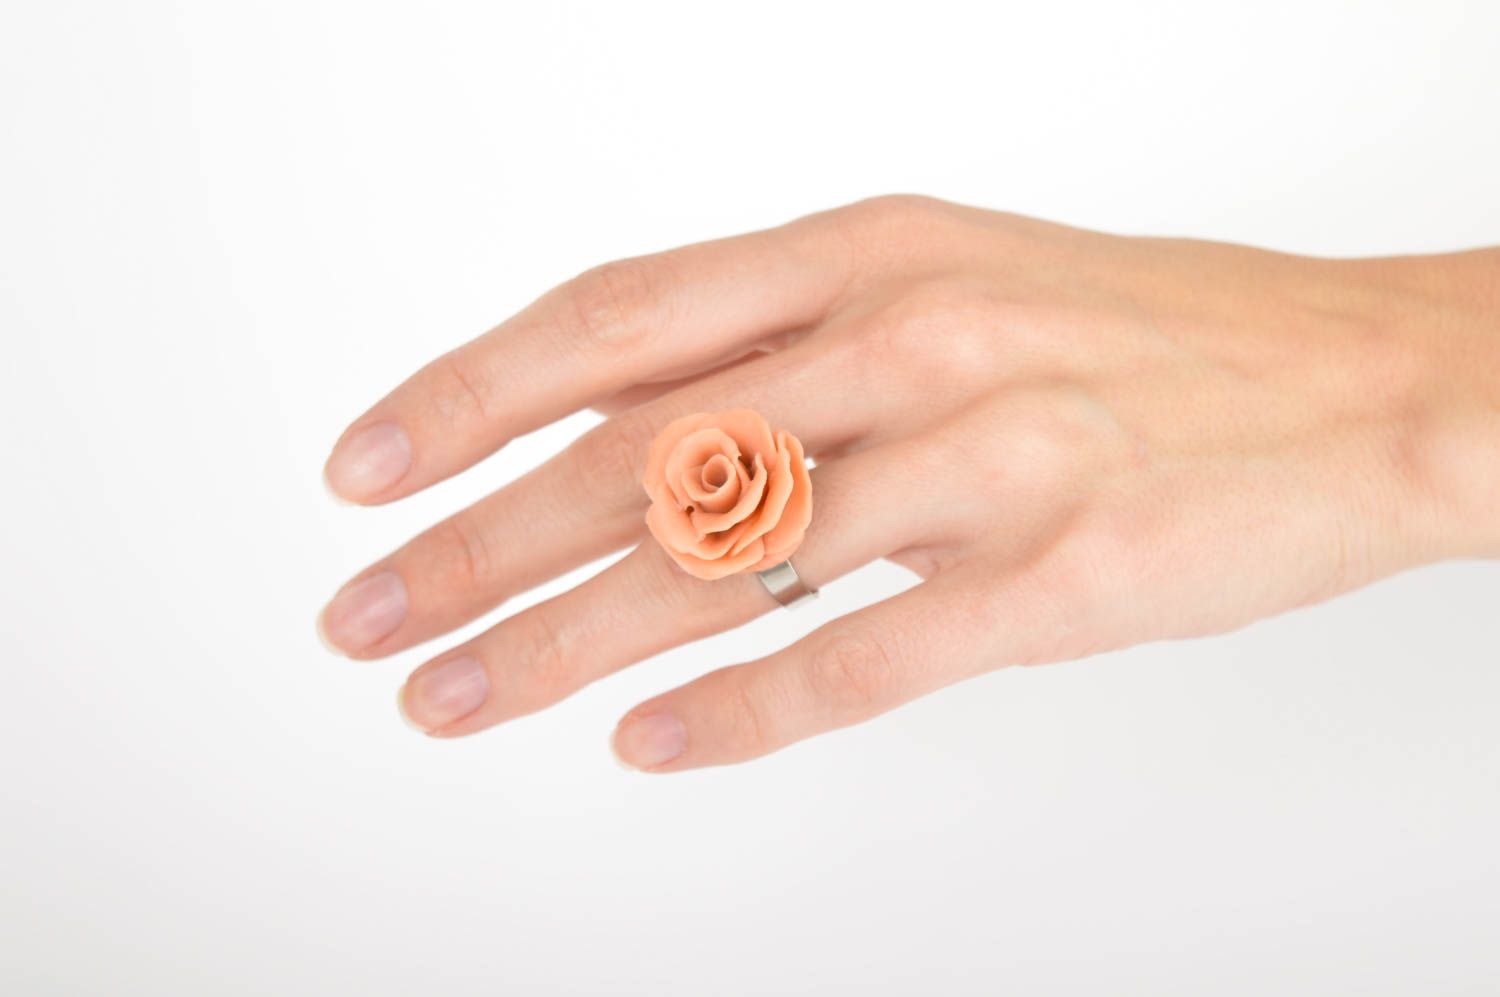 Plastic flower ring designer ring for women fashion jewelry handmade accessories photo 3